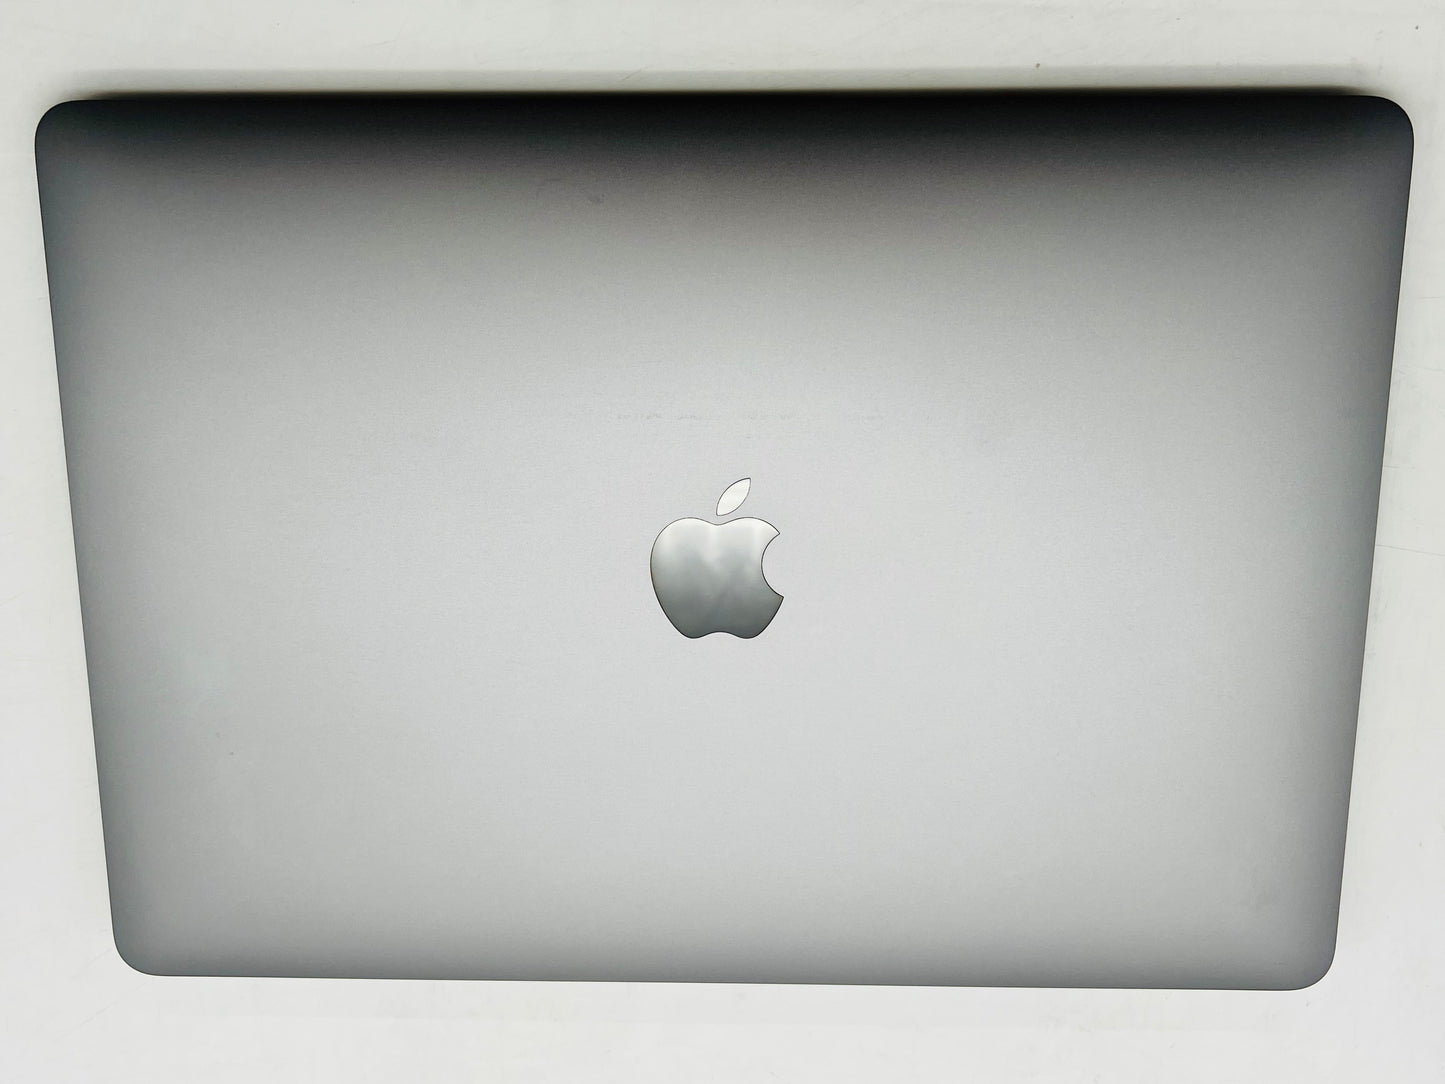 Apple 2020 MacBook Air 13 in 1.1GHz Dual-Core i3 16GB RAM 256GB SSD IIPG 1536 MB